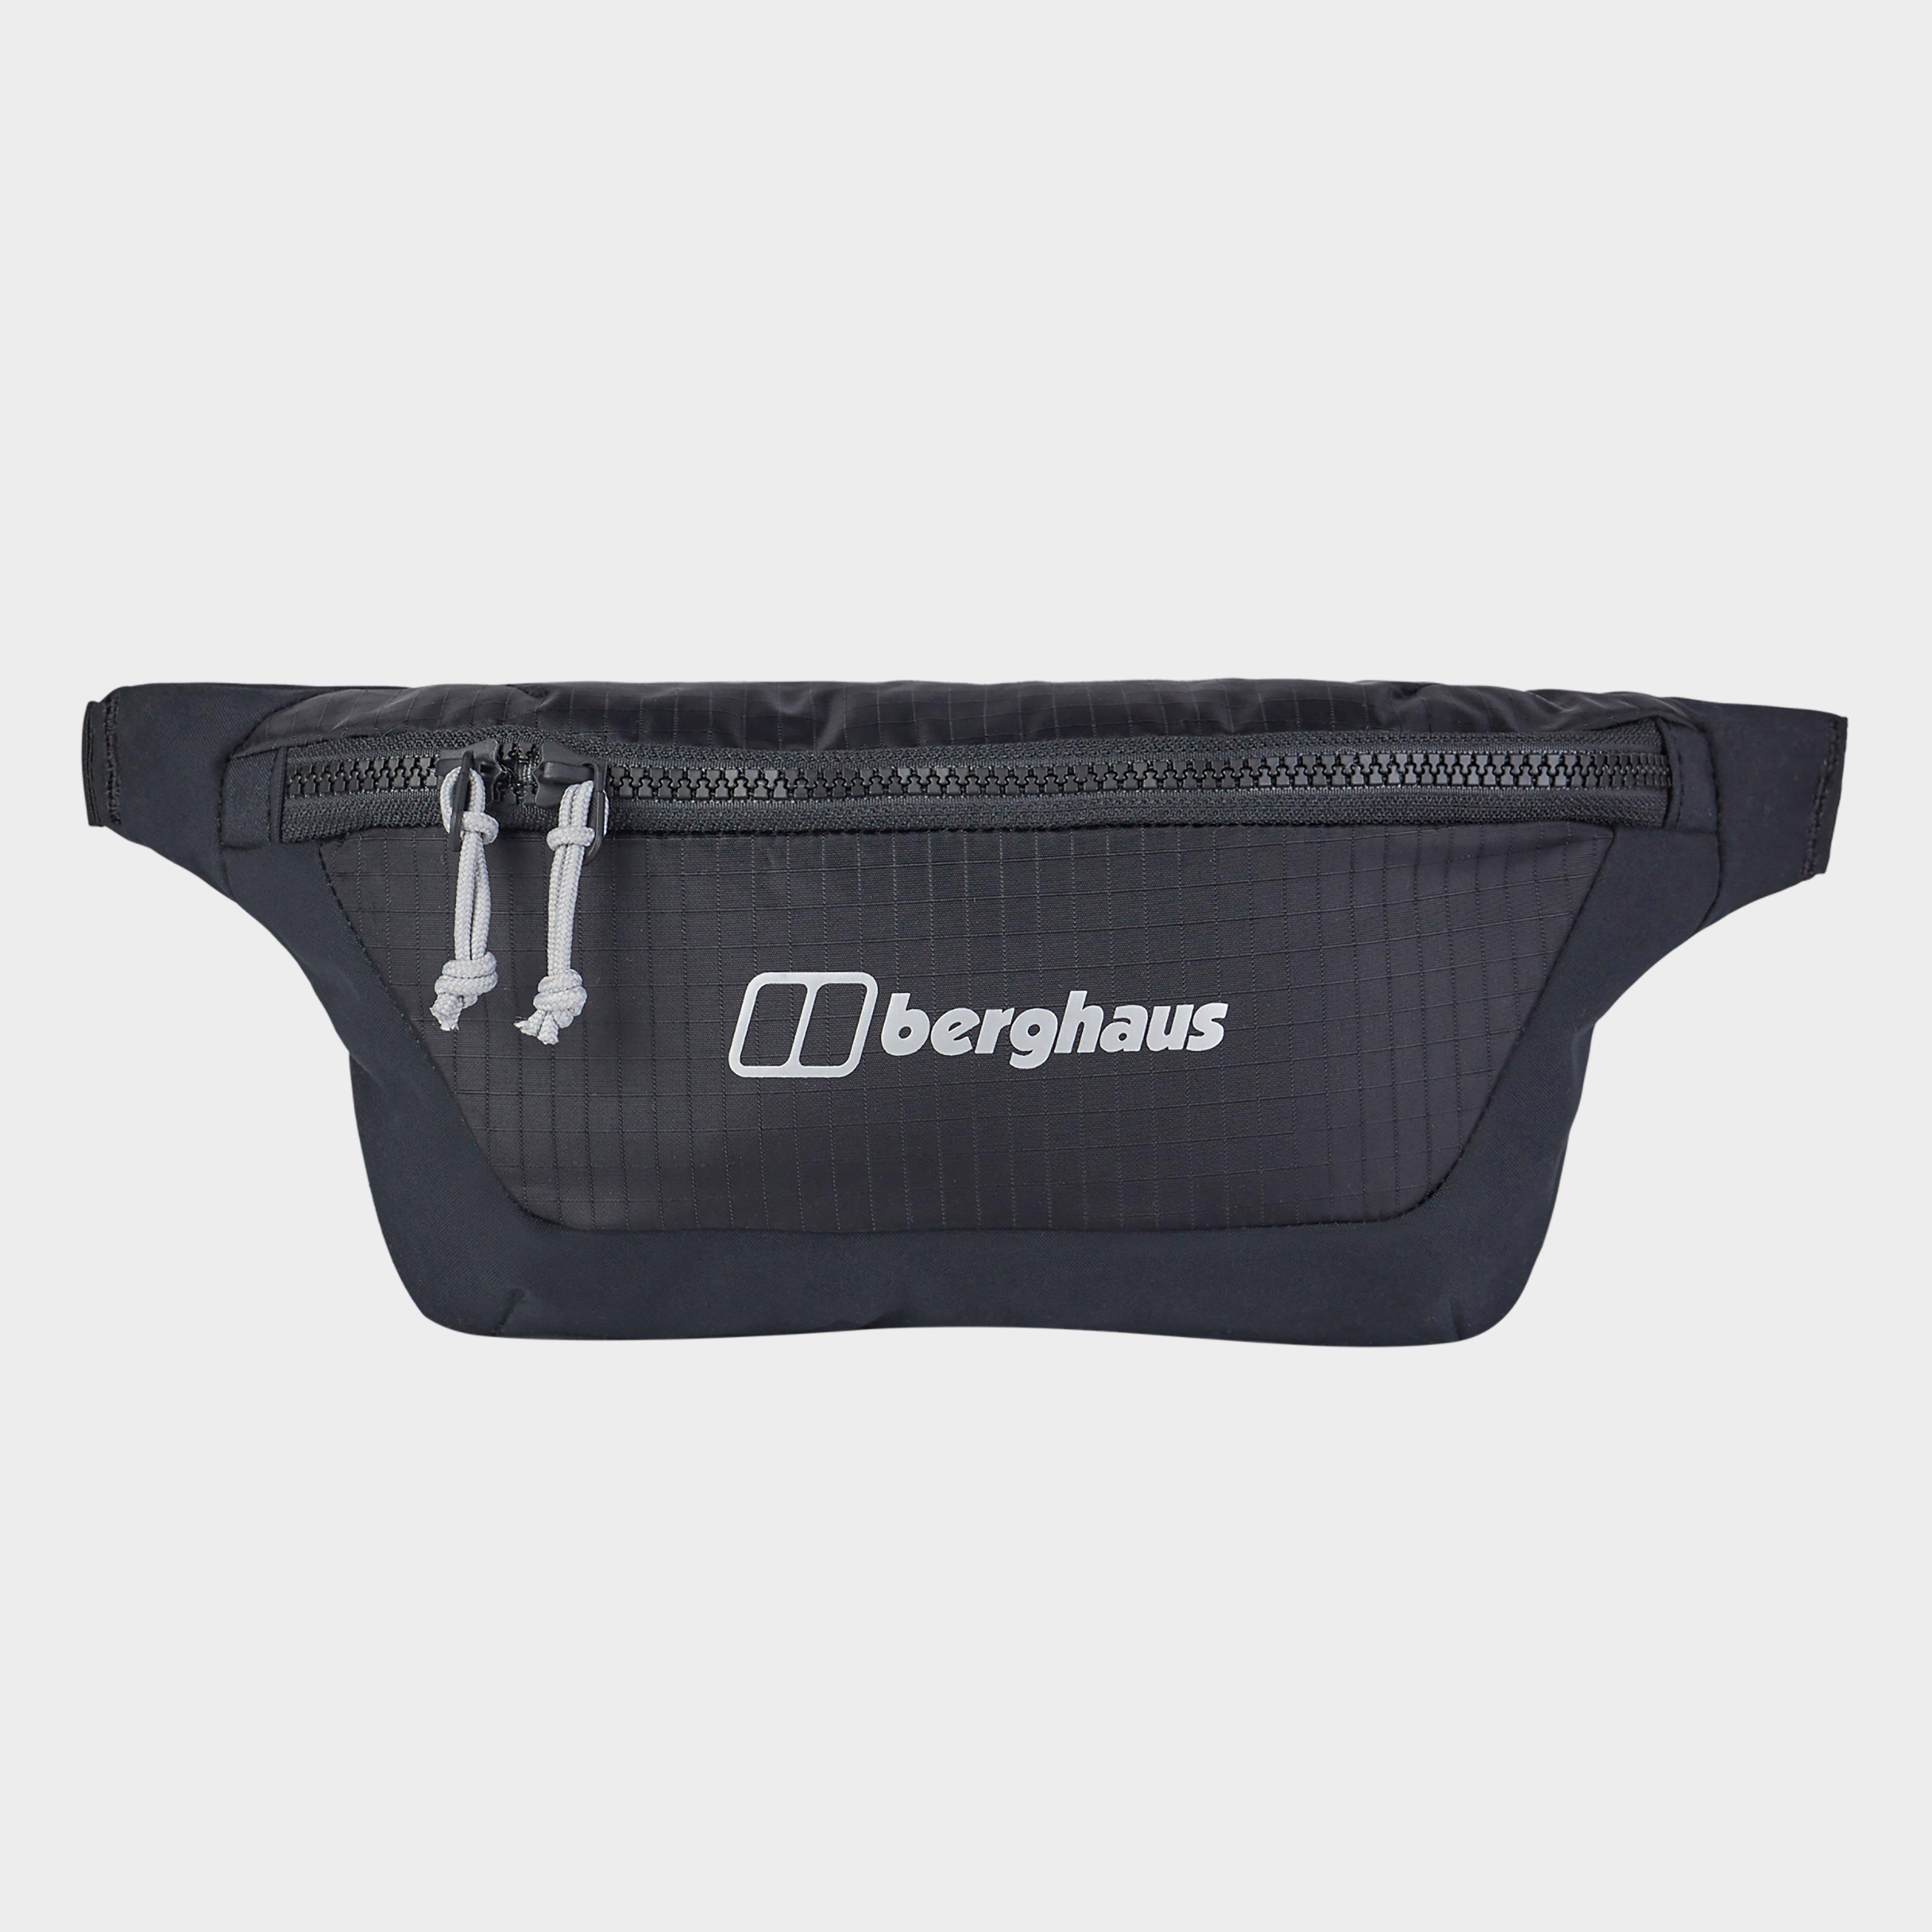 Berghaus Unisex Carryall Bum Bag, Black